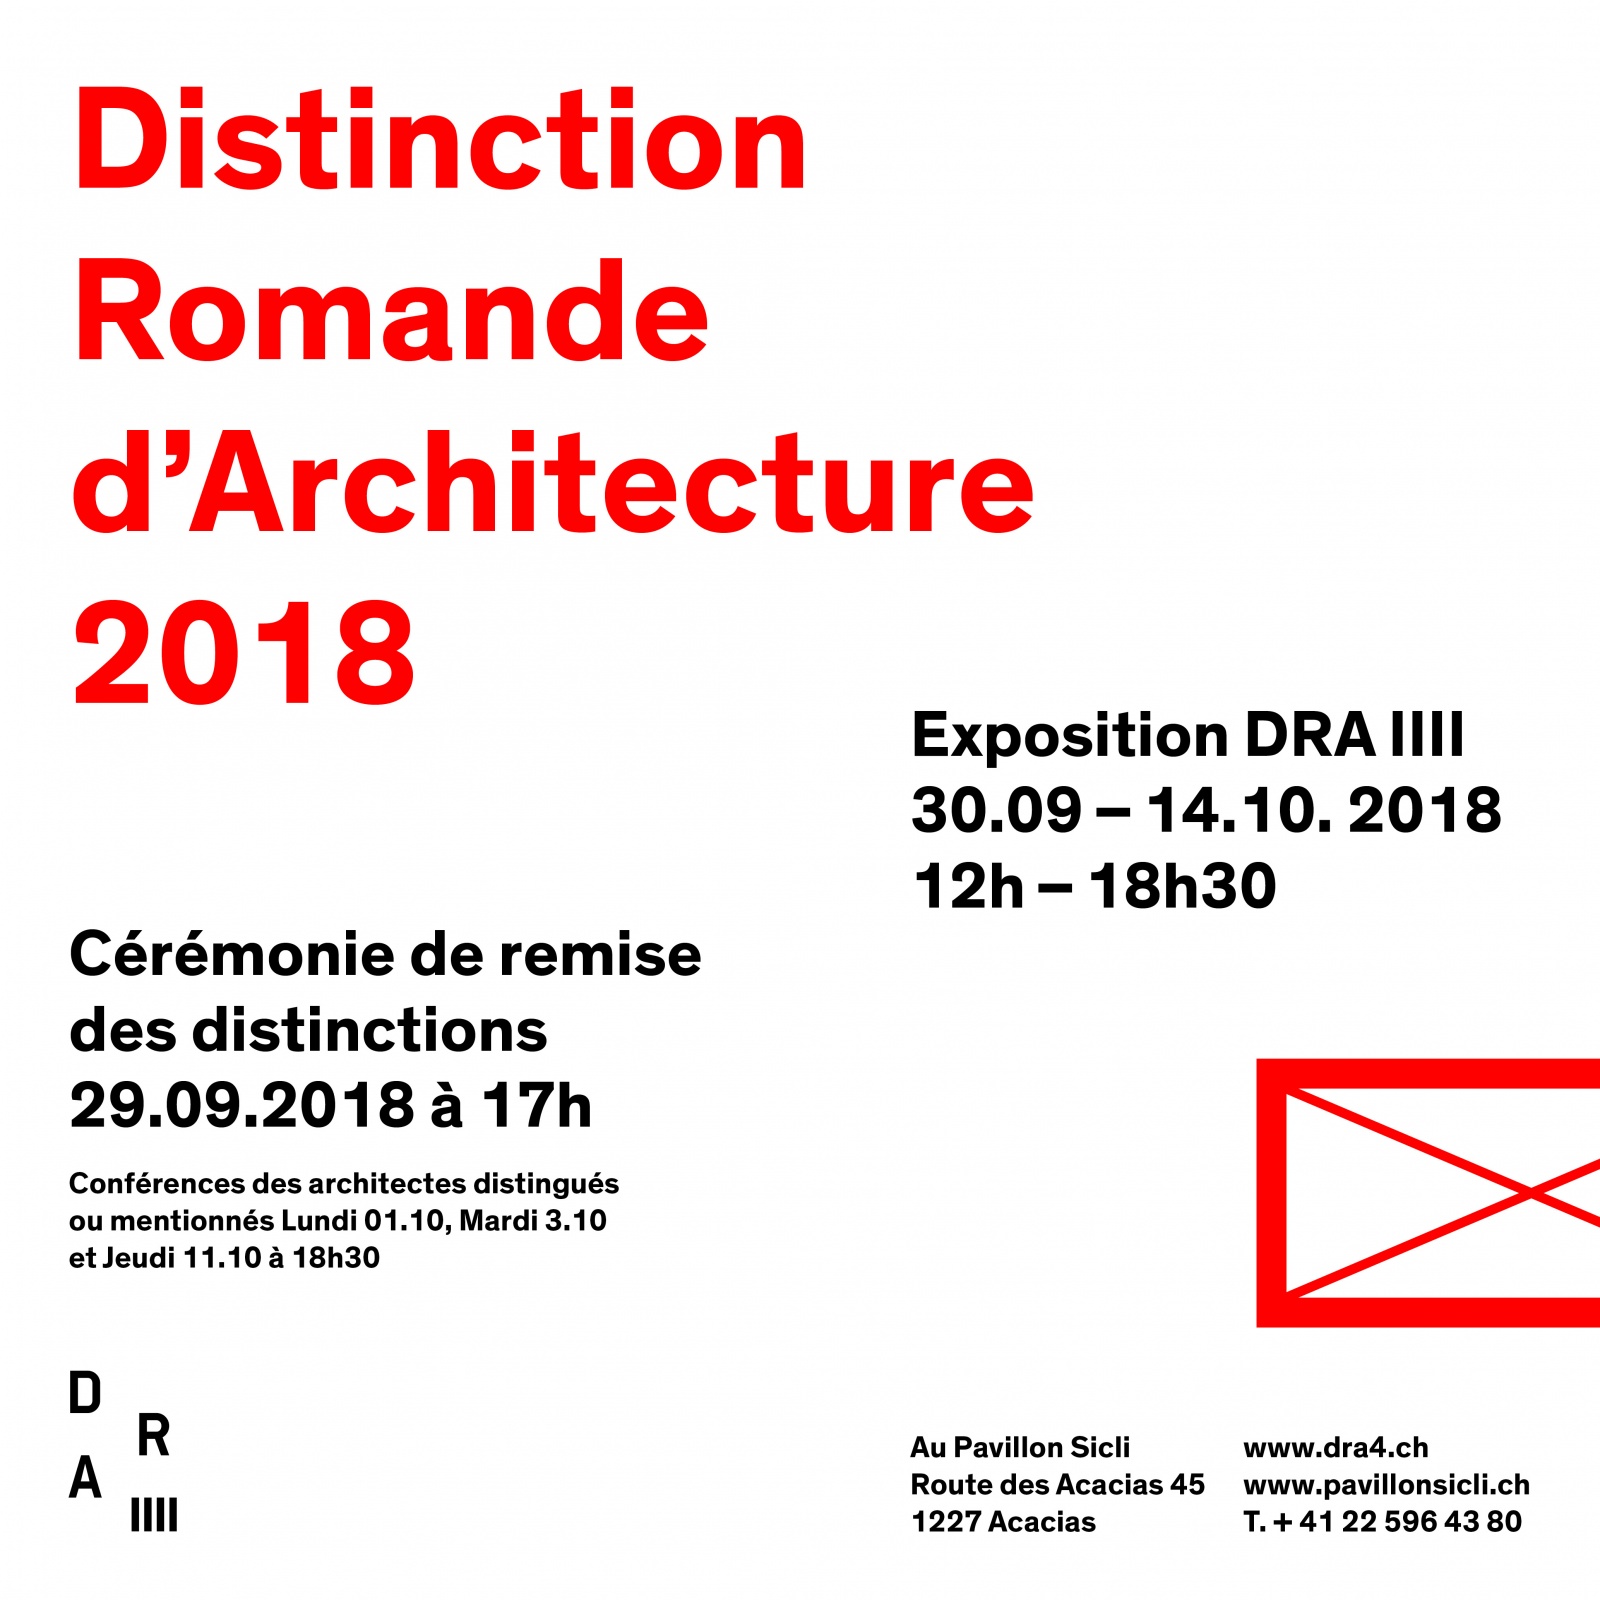 Distinction Romande d'Architecture (DRA IIII)